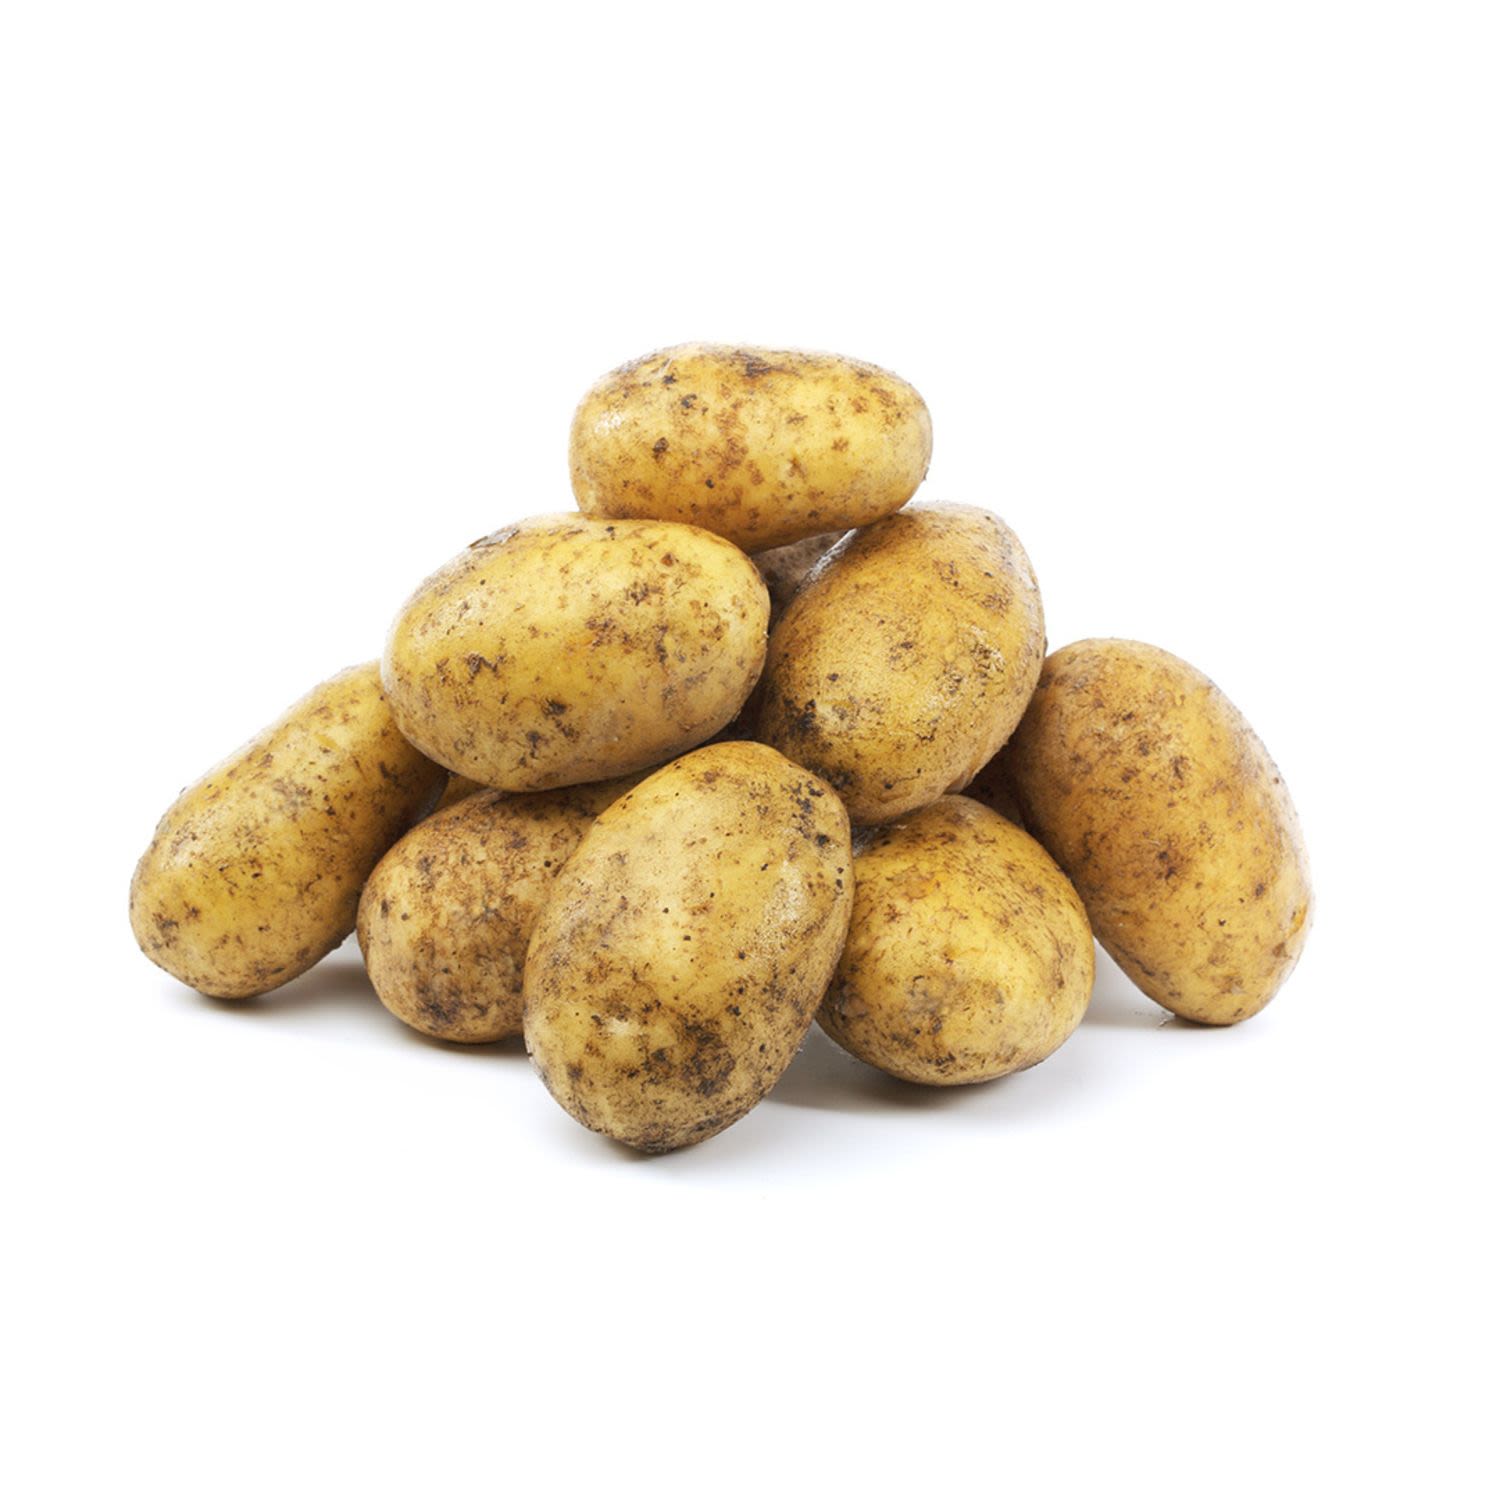 Brushed Potato 5kg, 1 Each